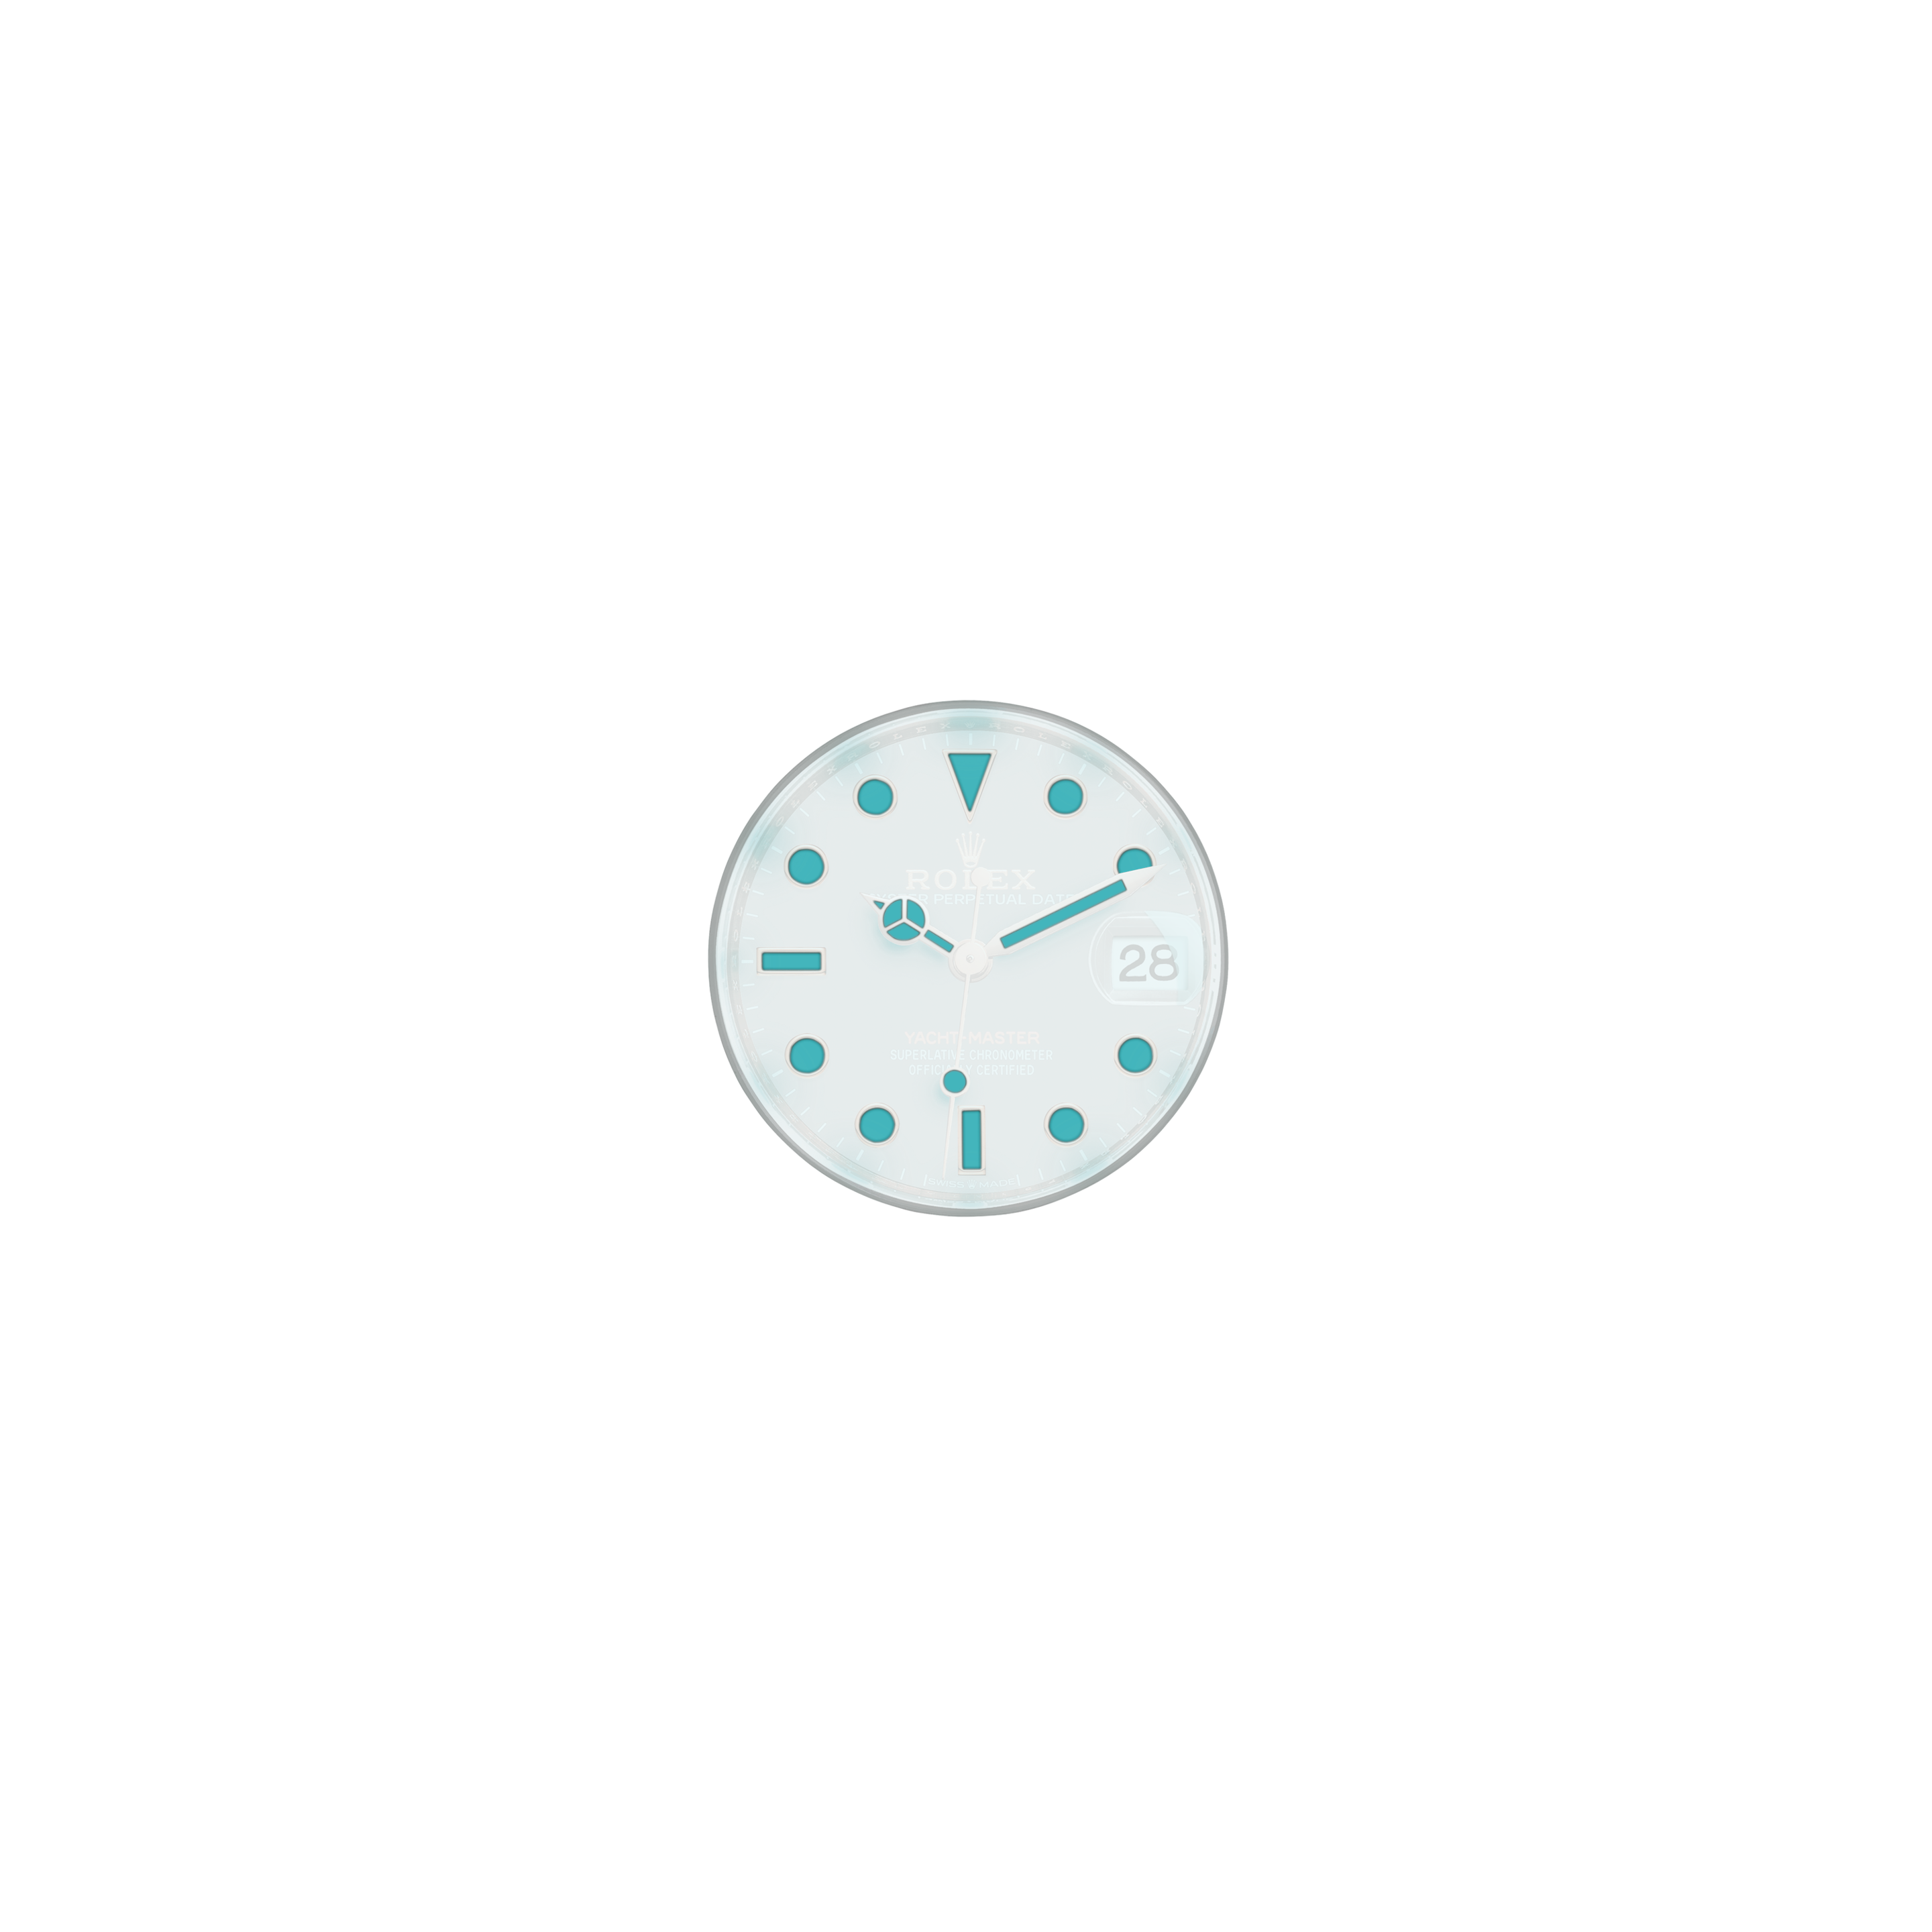 Rolex Datejust Men's 18k Watch Blue Vignette 16018